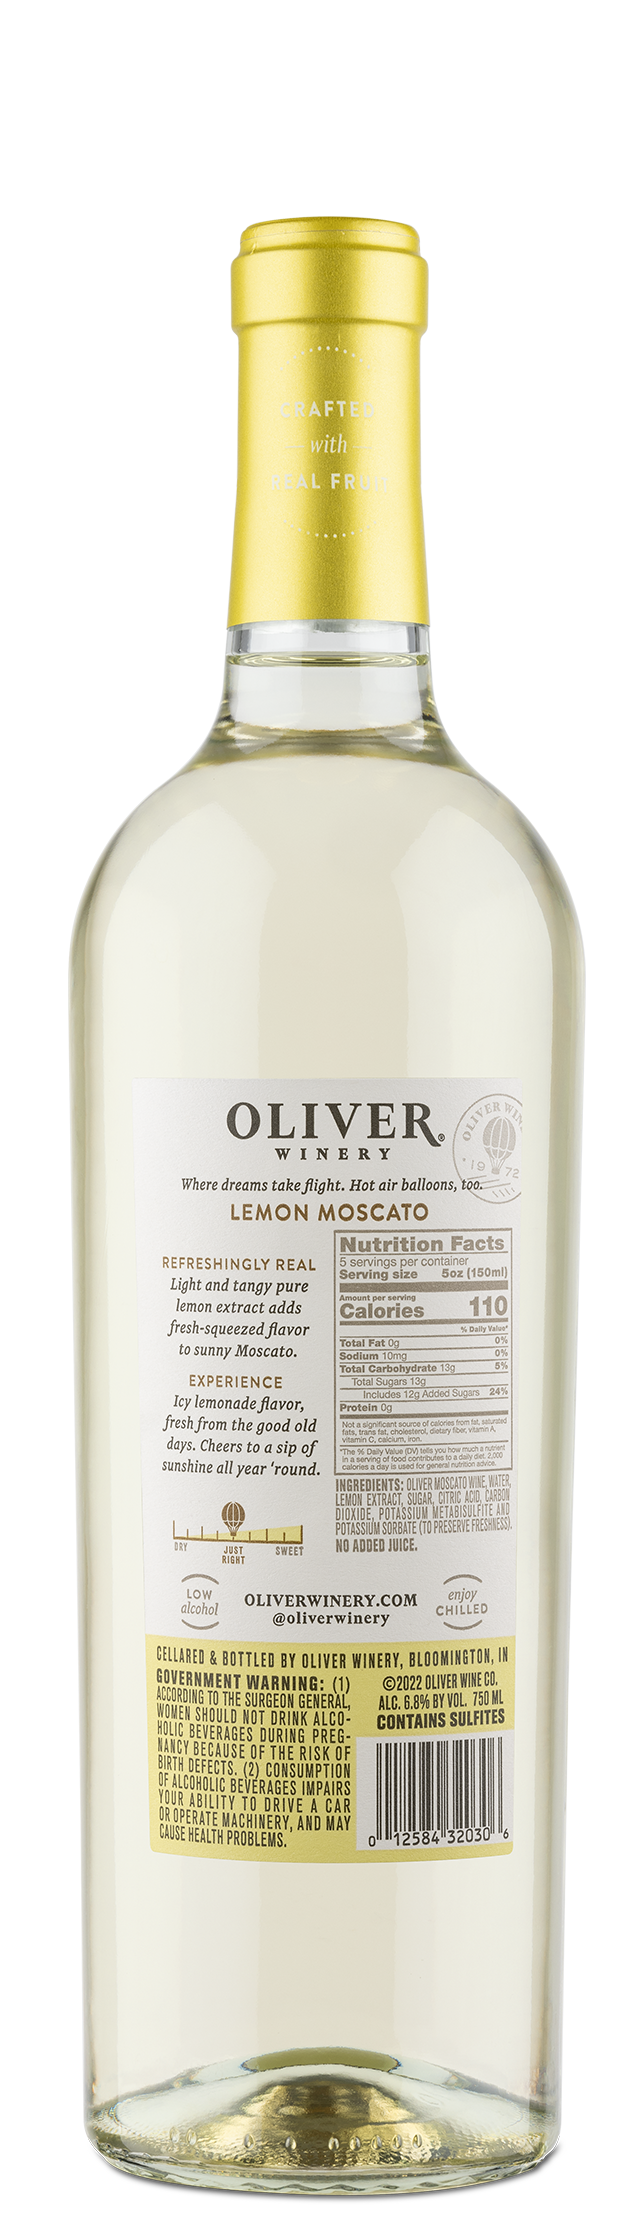 Oliver Winery Vine Series Lemon Moscato Nutrition Information